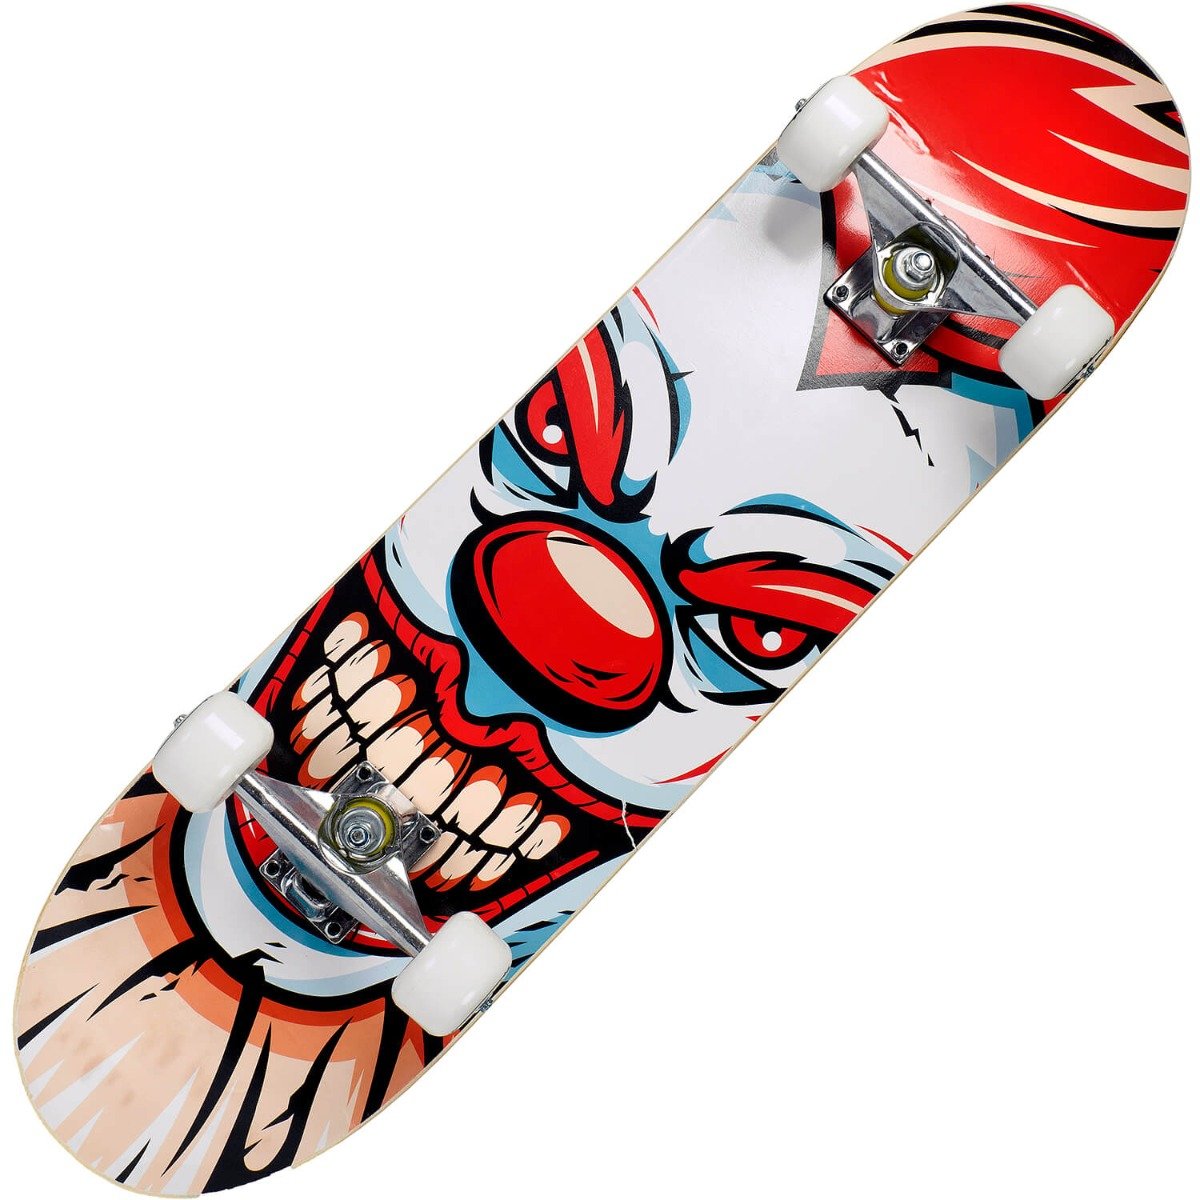 Skateboard Action One, ABEC-7 Aluminiu, 79 x 20 cm, Multicolor Clown Action One